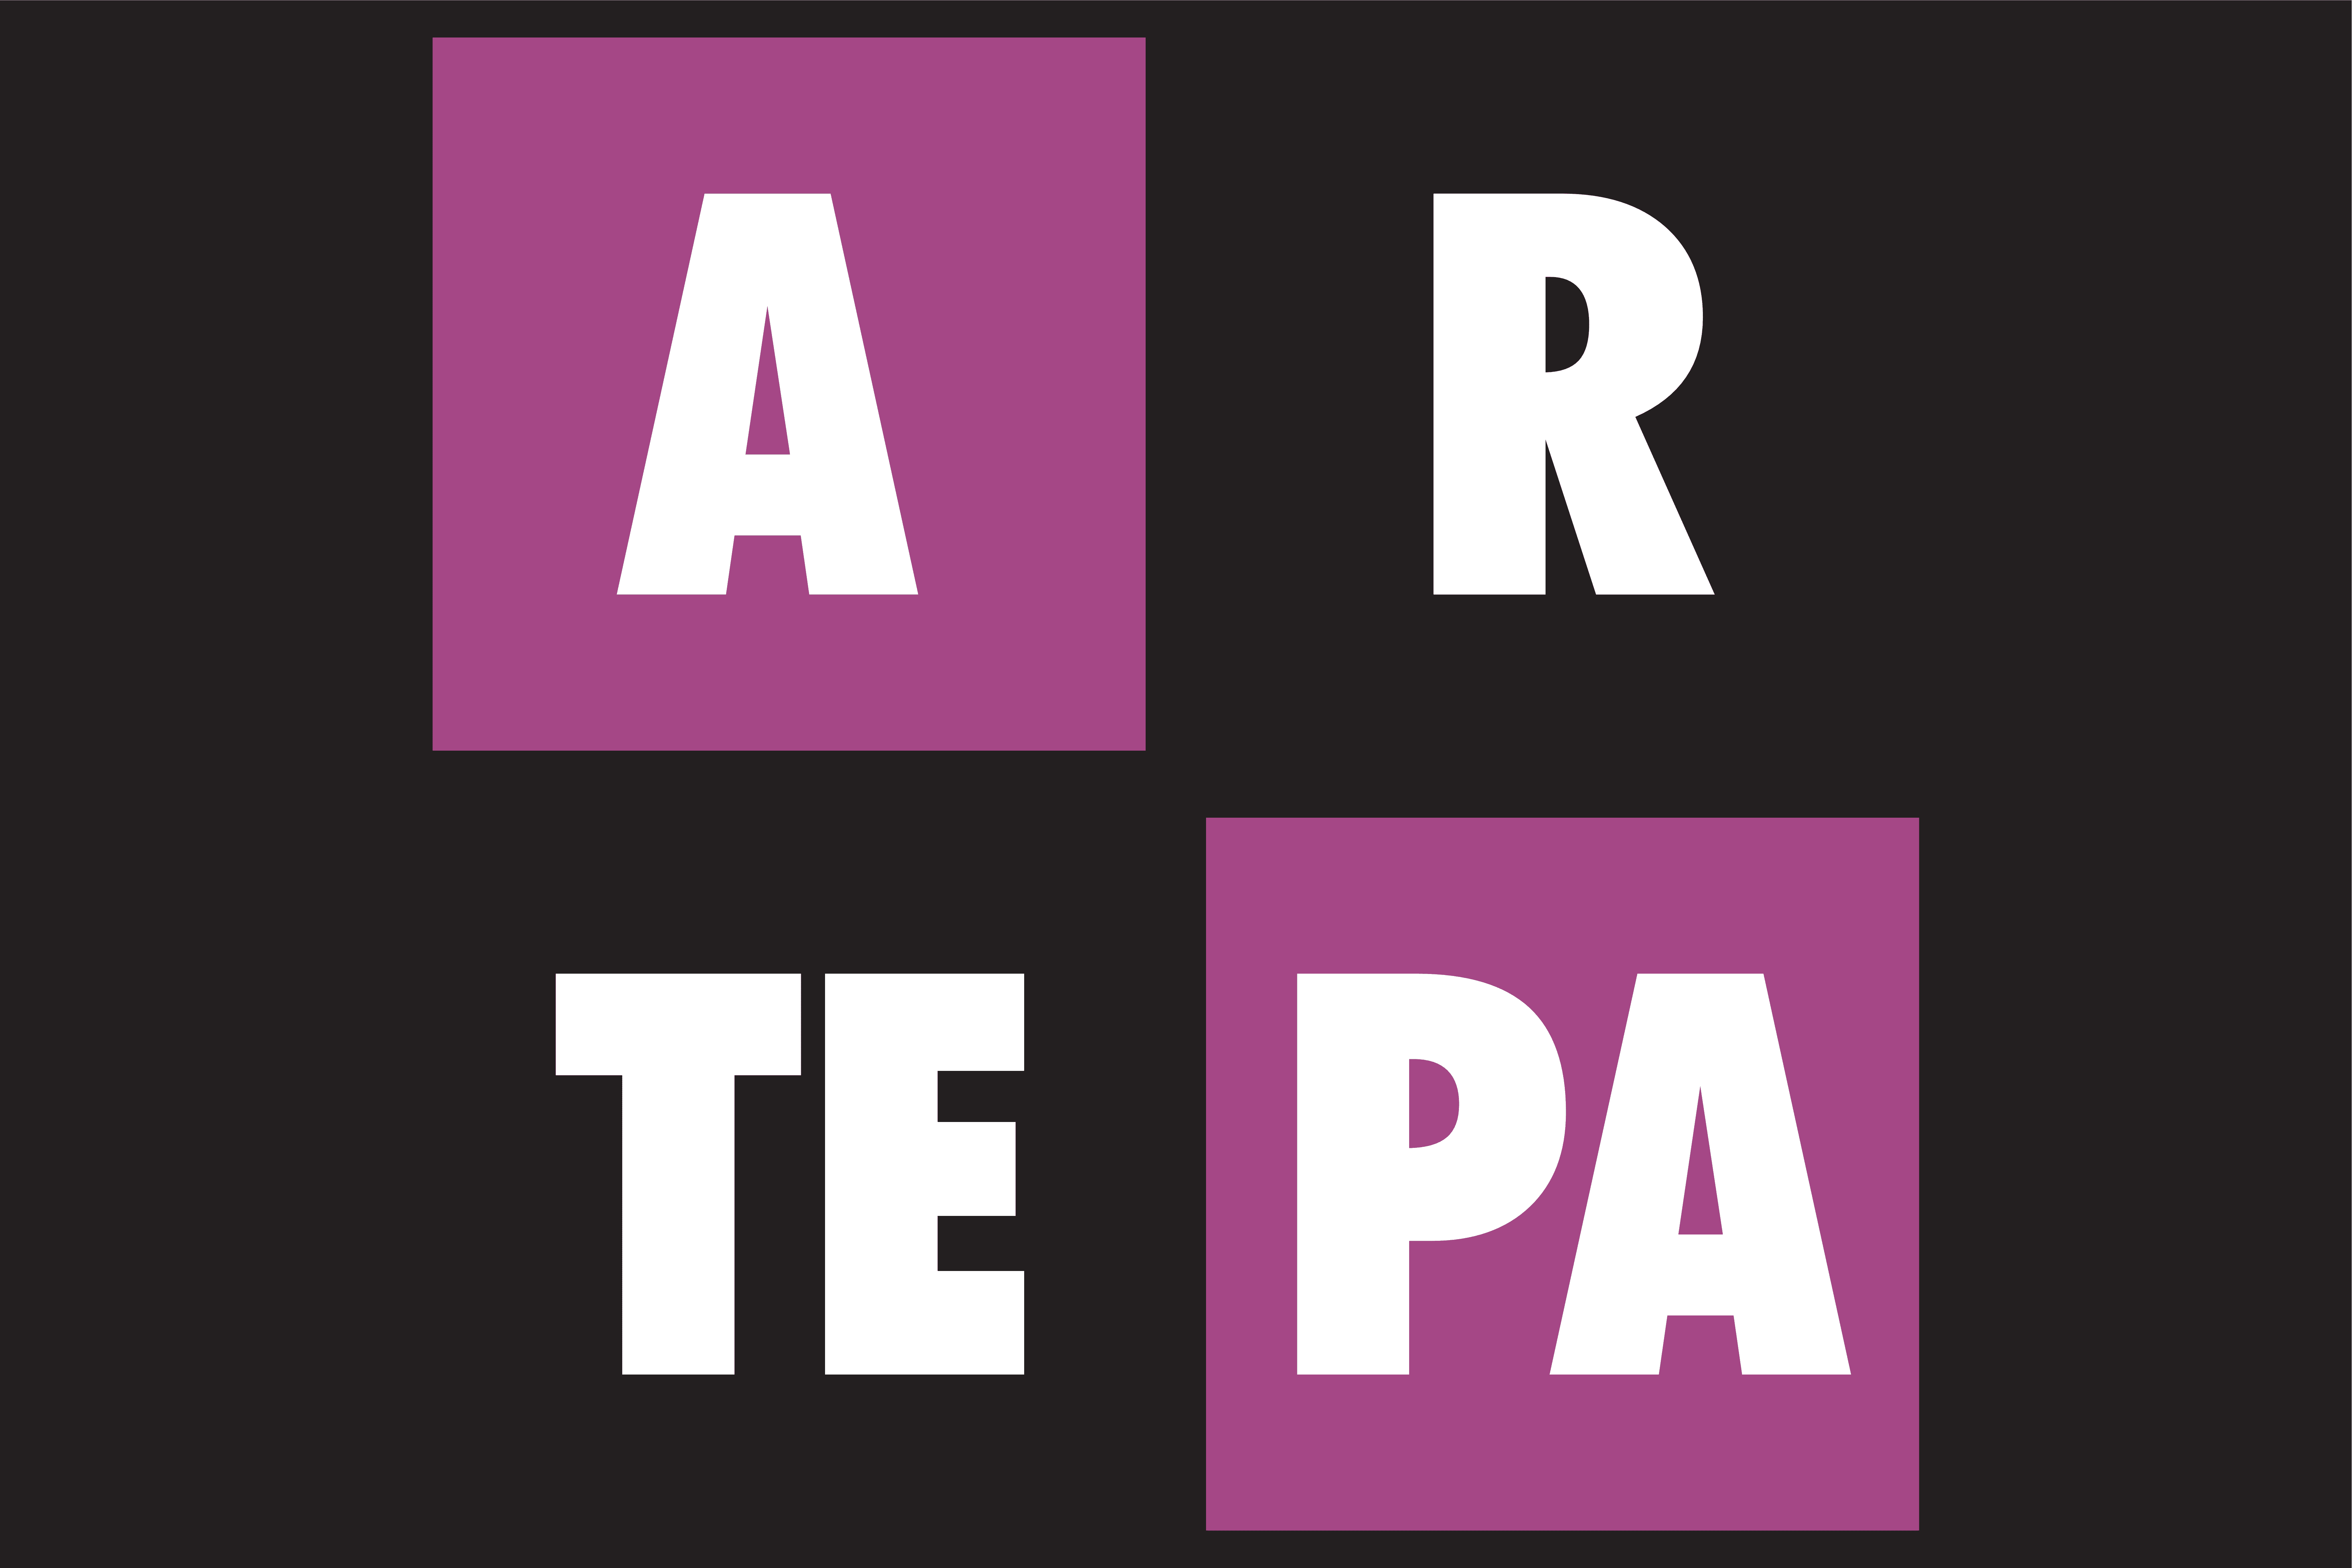 Artepa